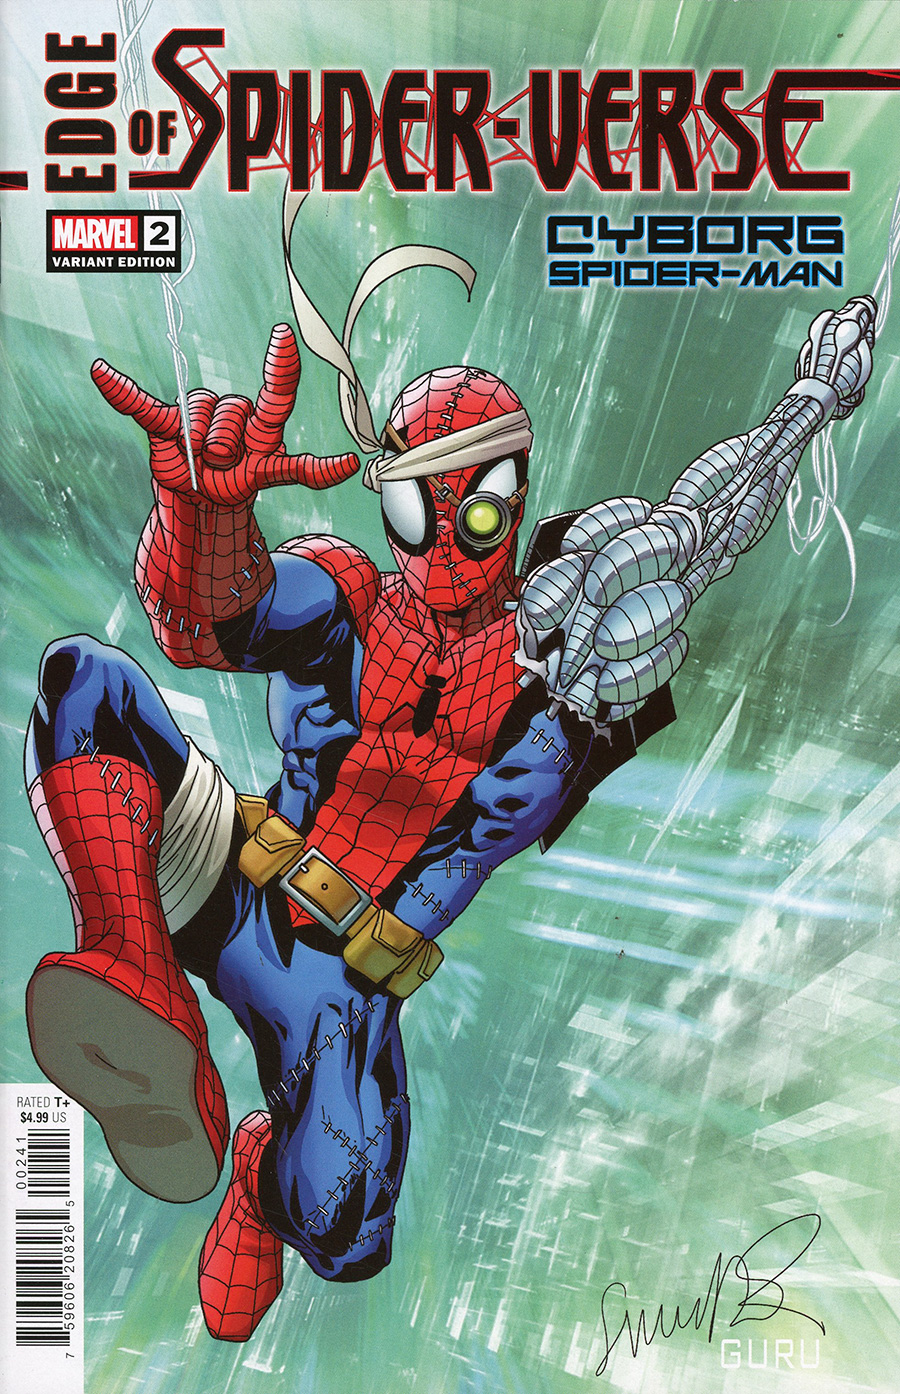 Edge Of Spider-Verse Vol 4 #2 Cover E Variant Salvador Larroca Cyborg Spider-Man Cover